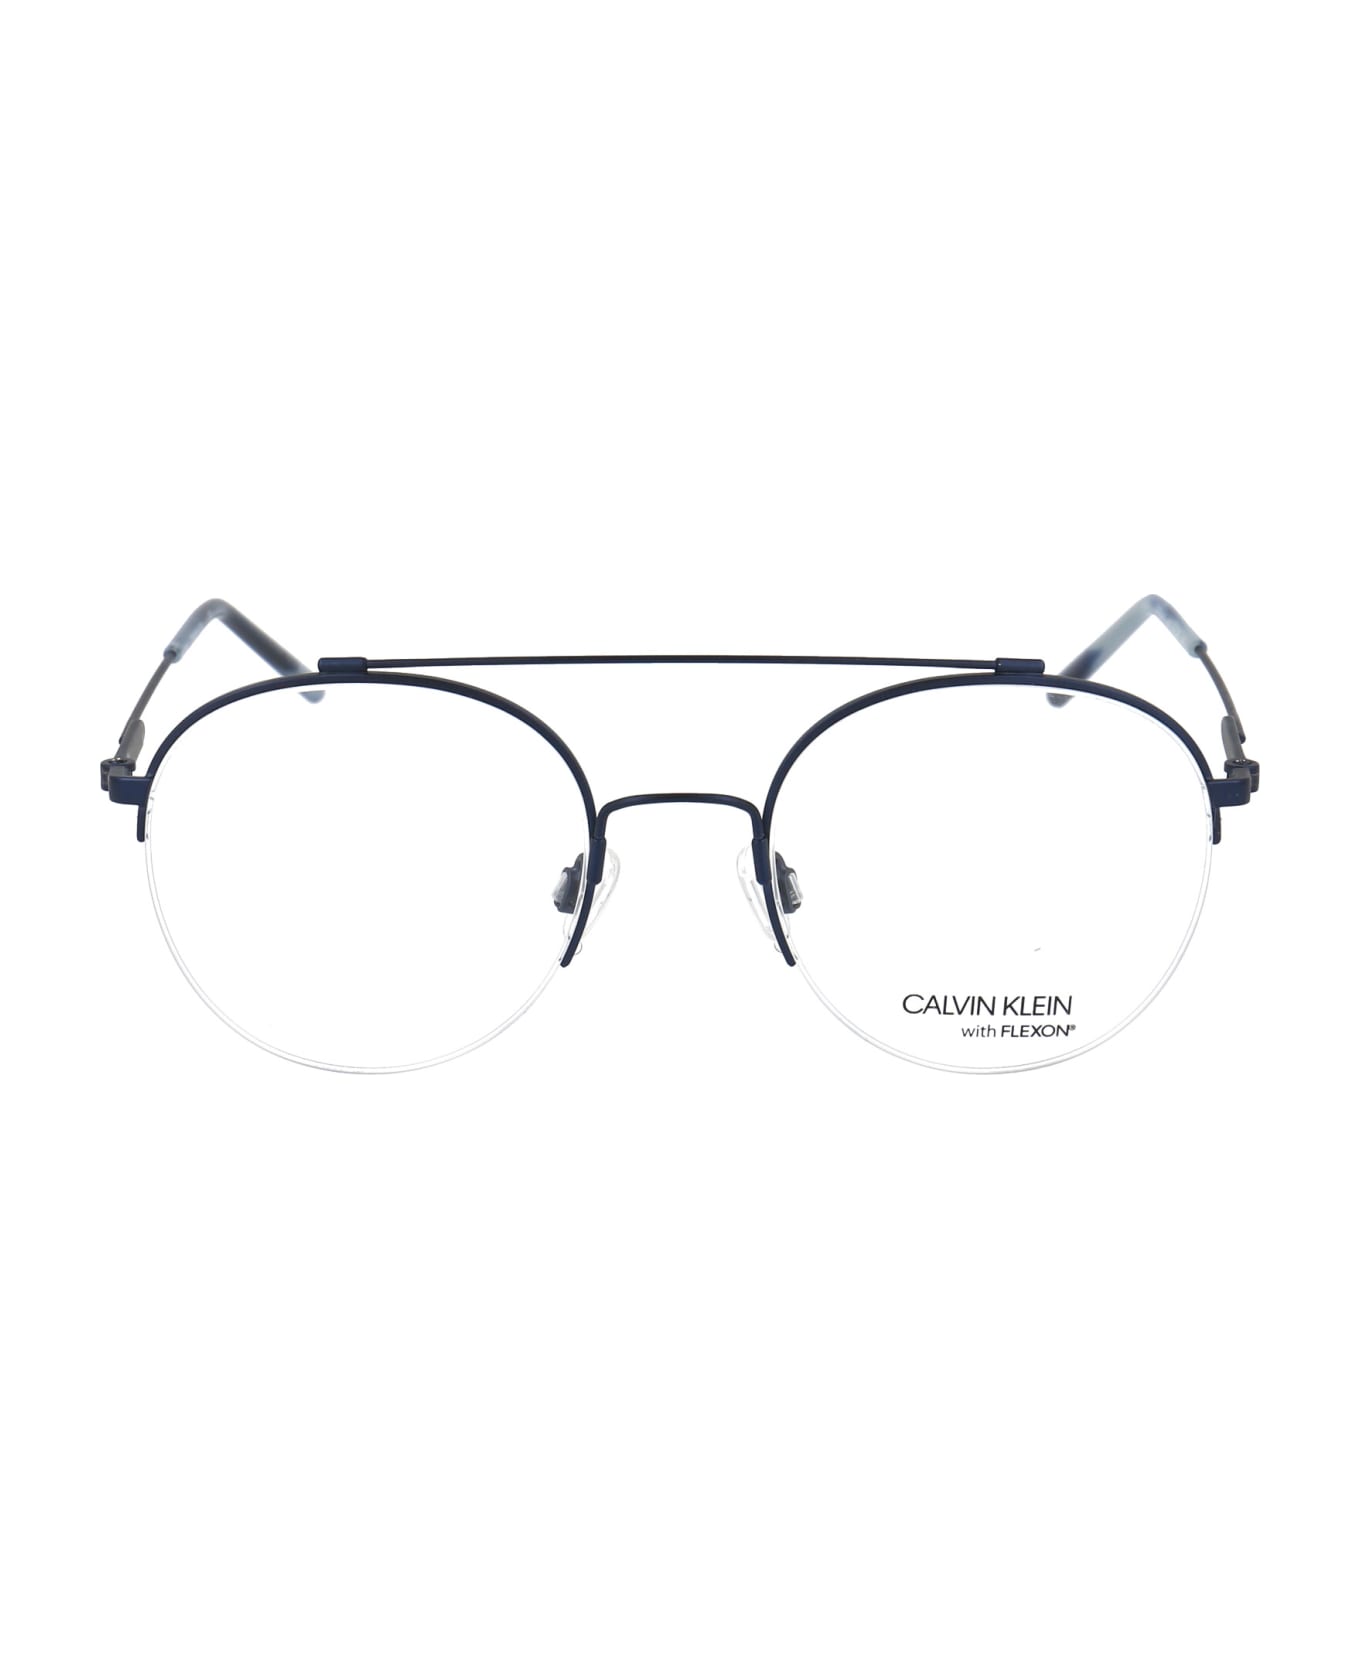 Calvin Klein Ck19144f Glasses - 410 SATIN NAVY